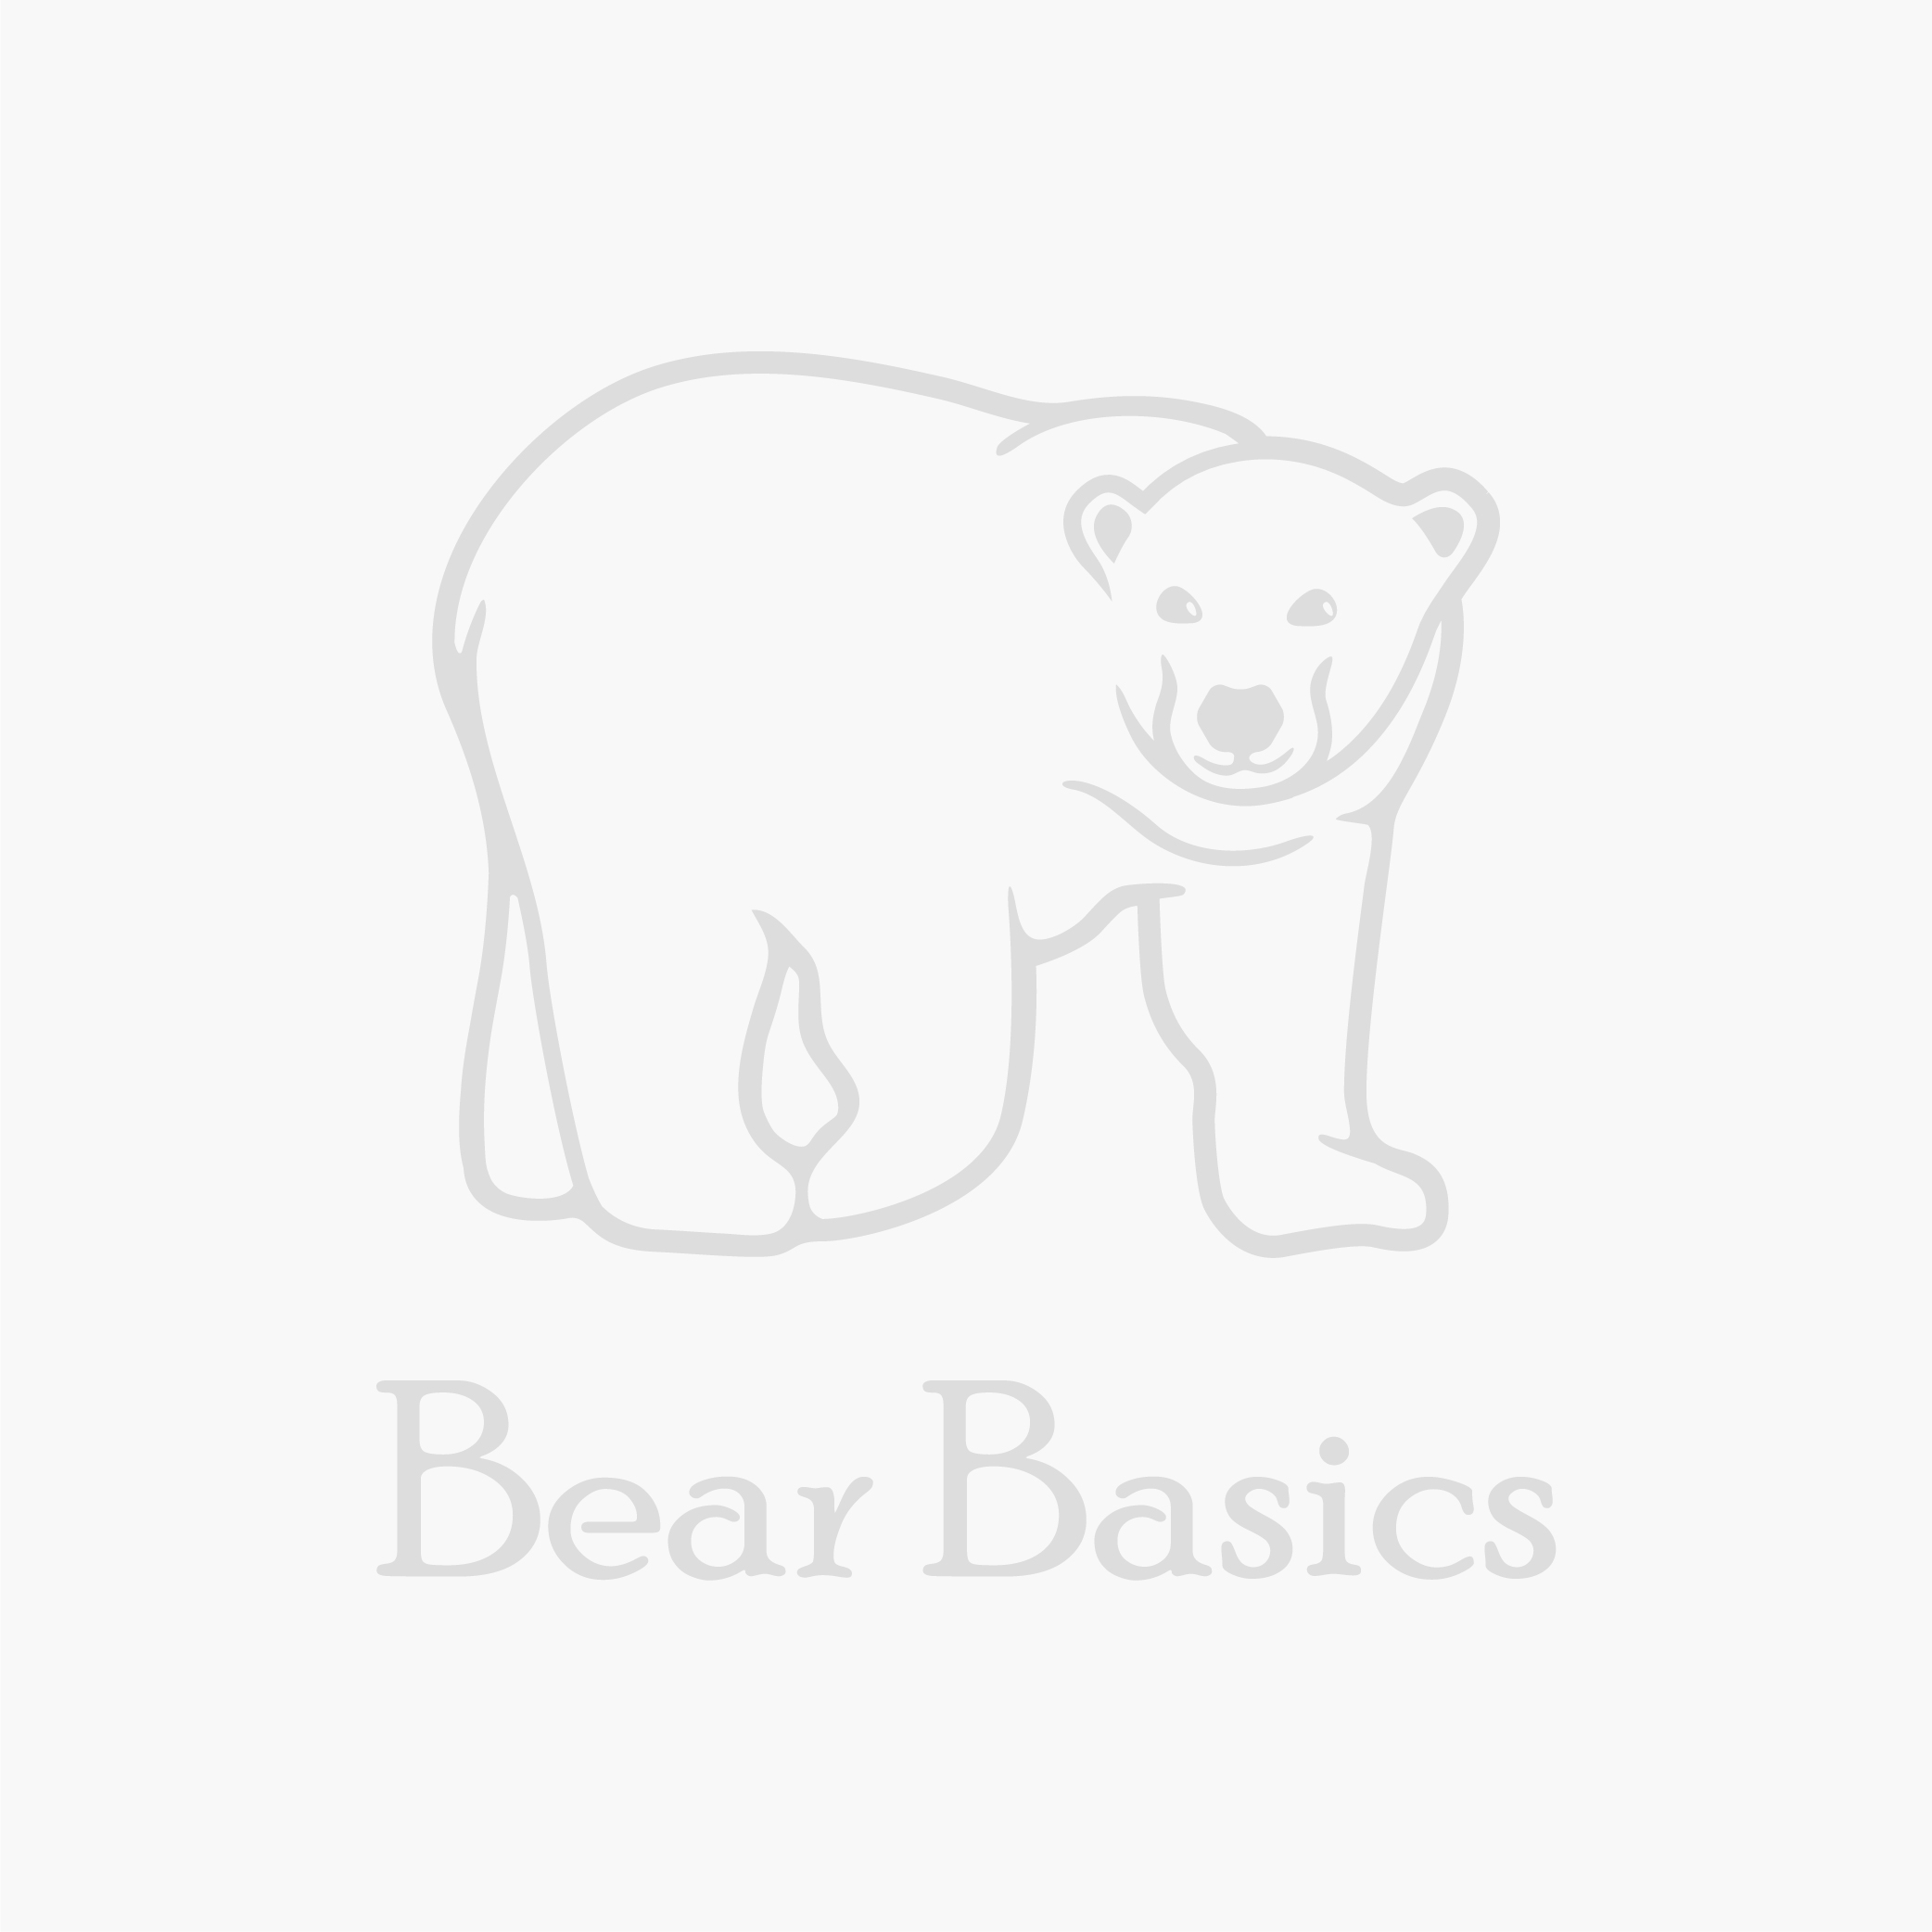 Safety Eyes from Bear Basics